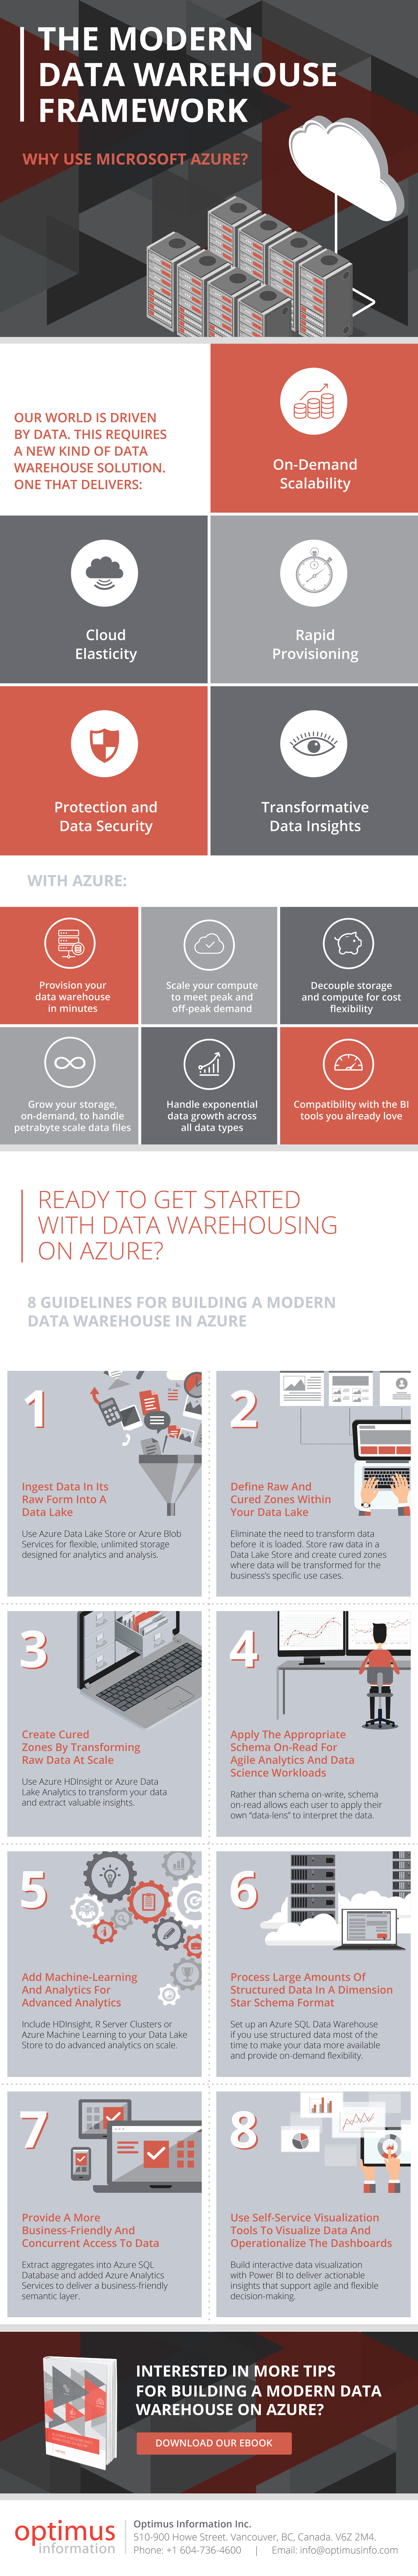 The-Modern-Data-Warehouse-Framework The Modern Data Warehouse Framework